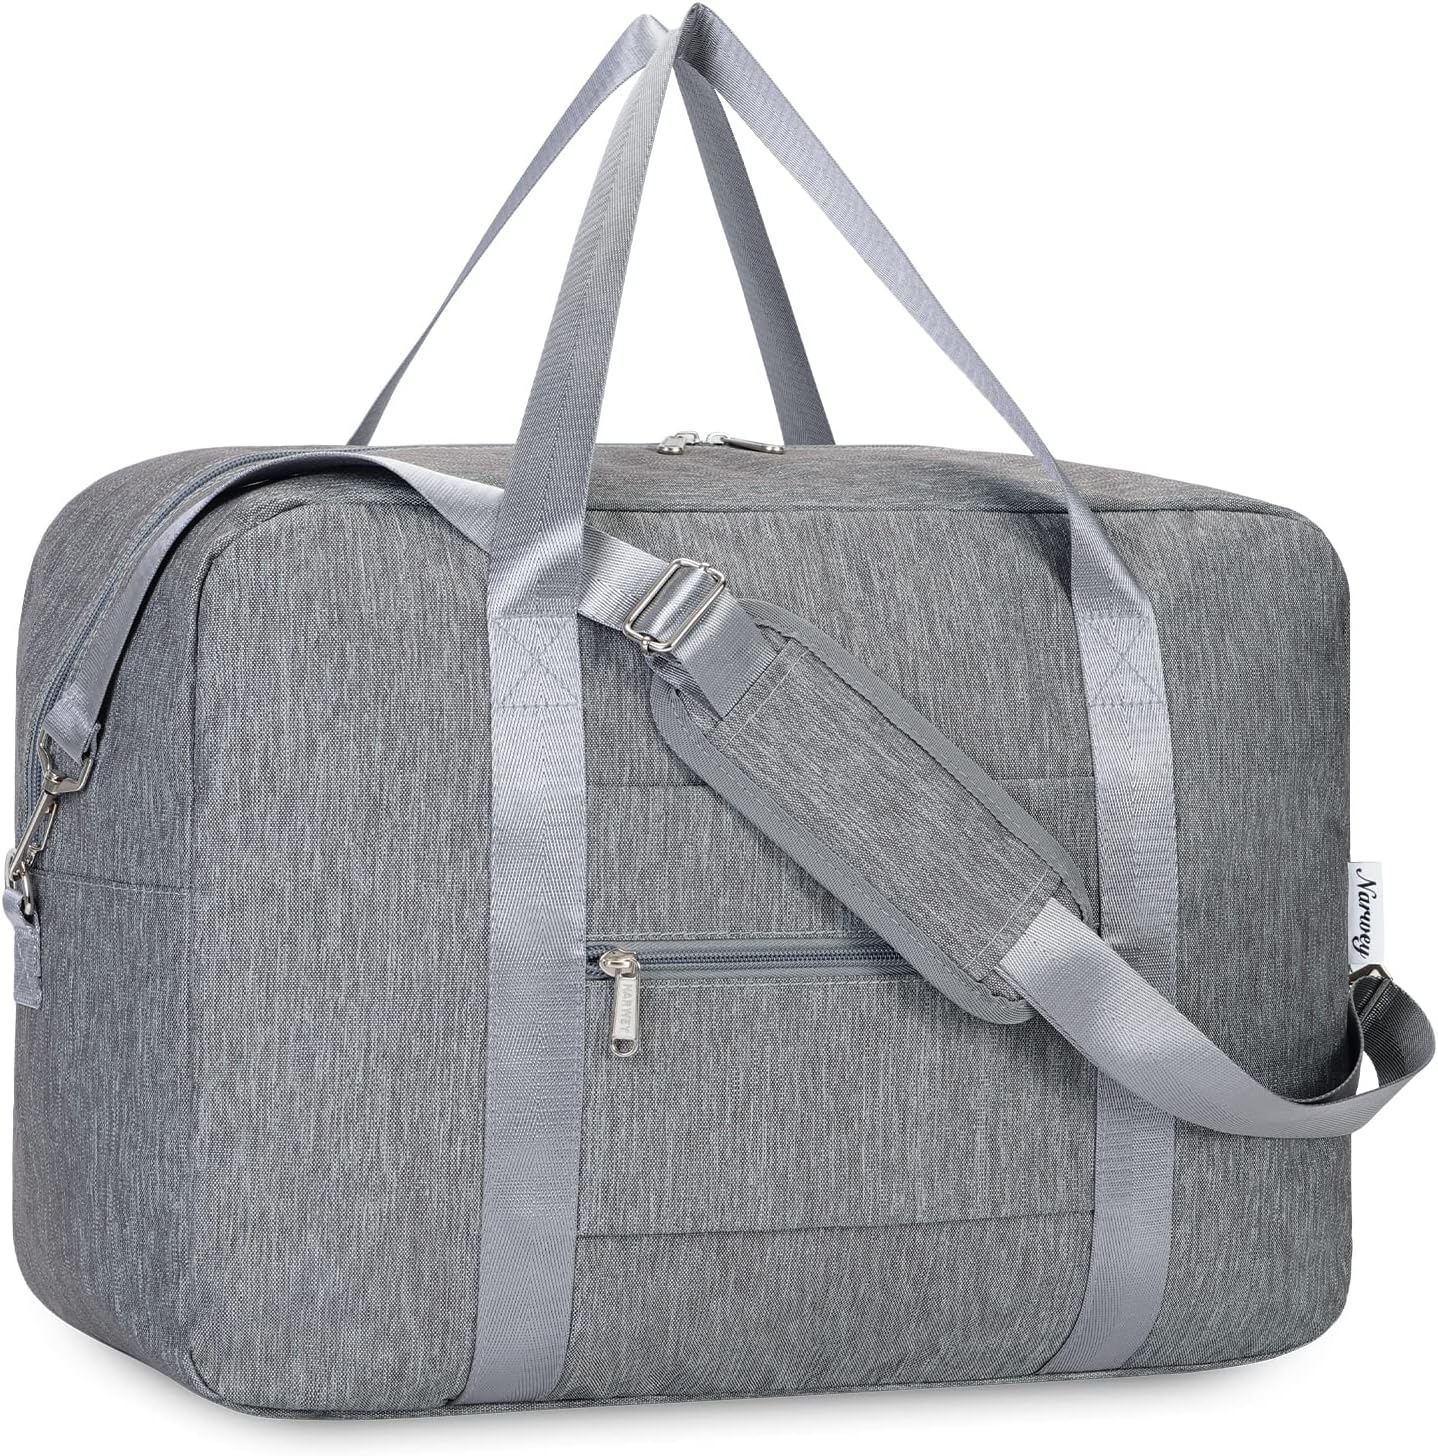 Narwey Duffel Bag Underseat Carry